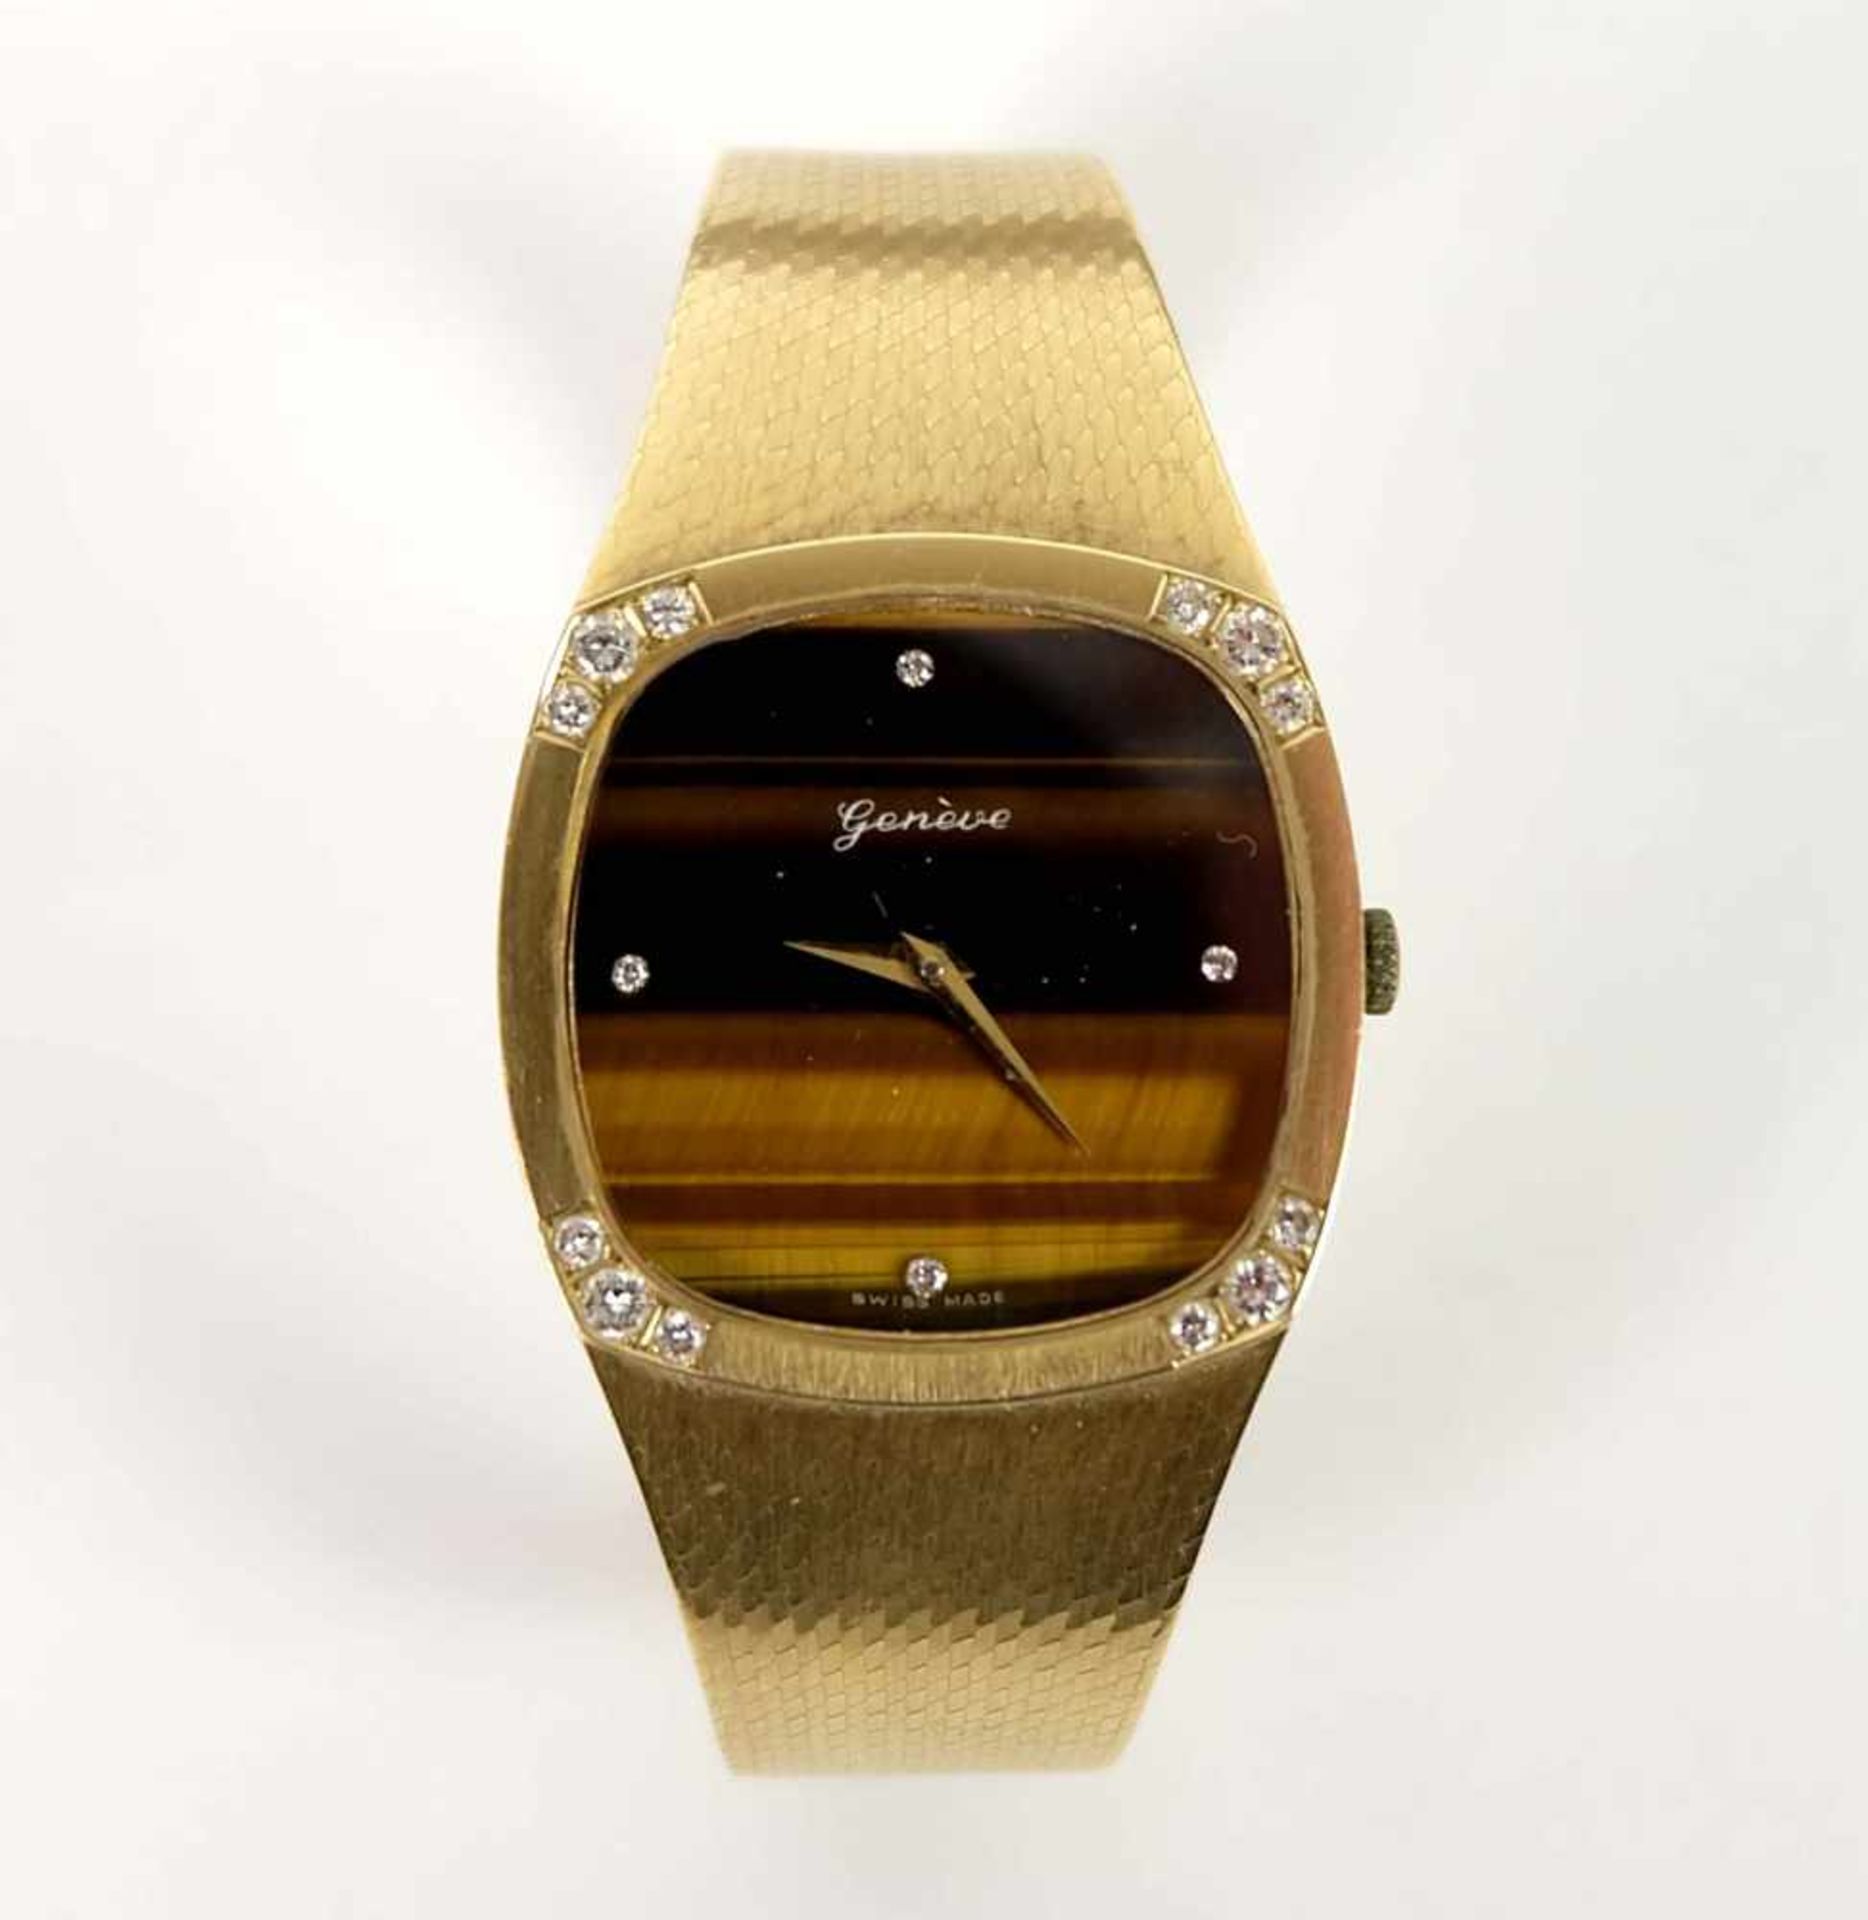 ARNBANDUHR, (Unisex), Hersteller Genève, 1970er-Jahre, 585er-Gold, verlaufendes Milanaiseband,